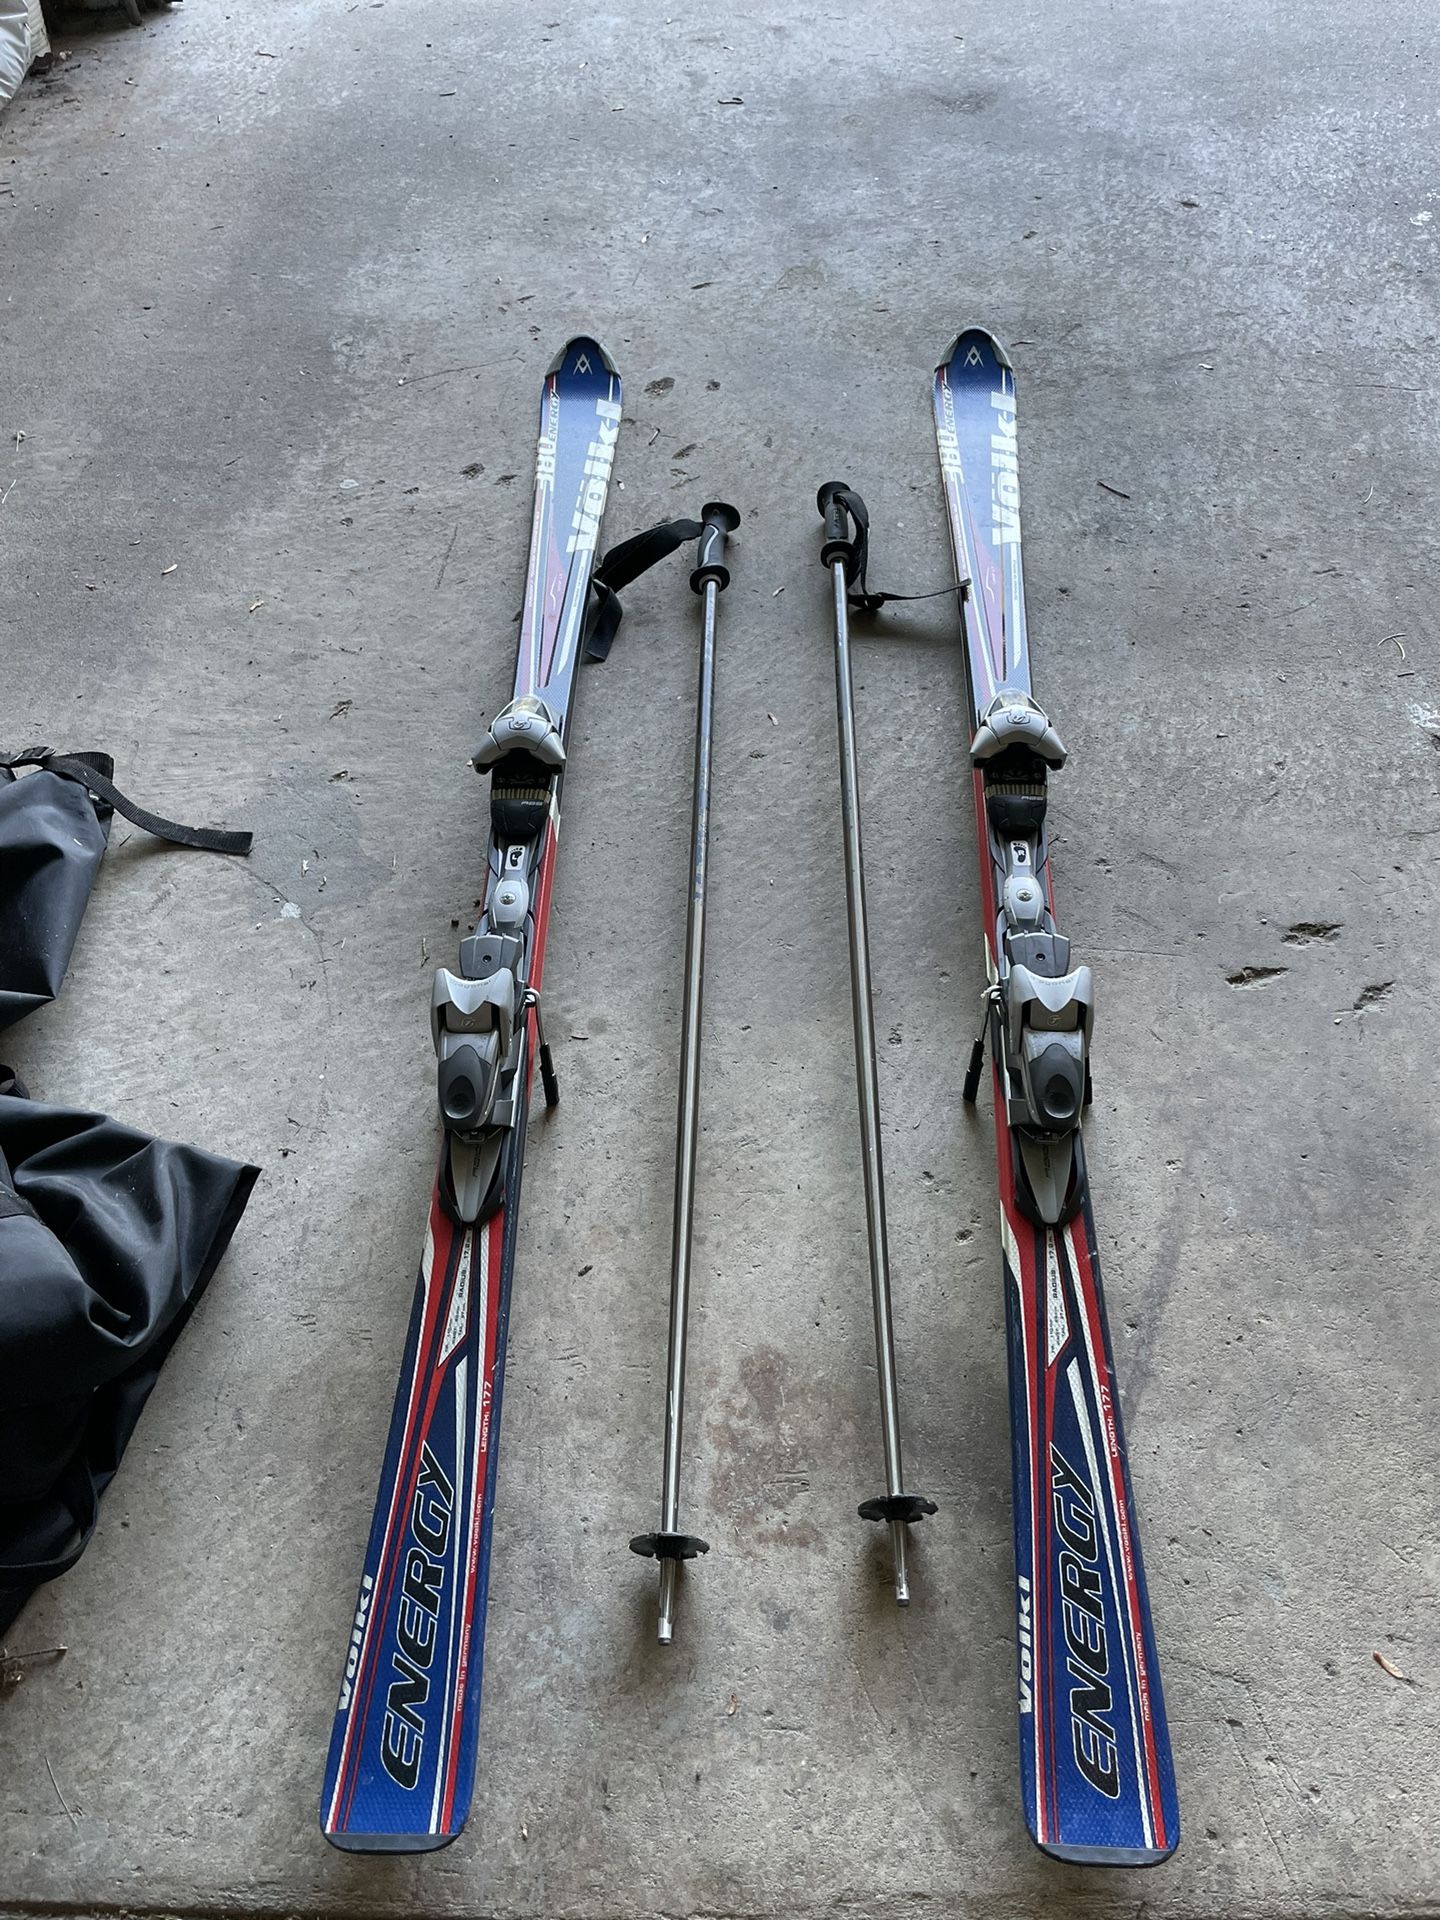 Vokl Downhill Skis, Poles, And Bag